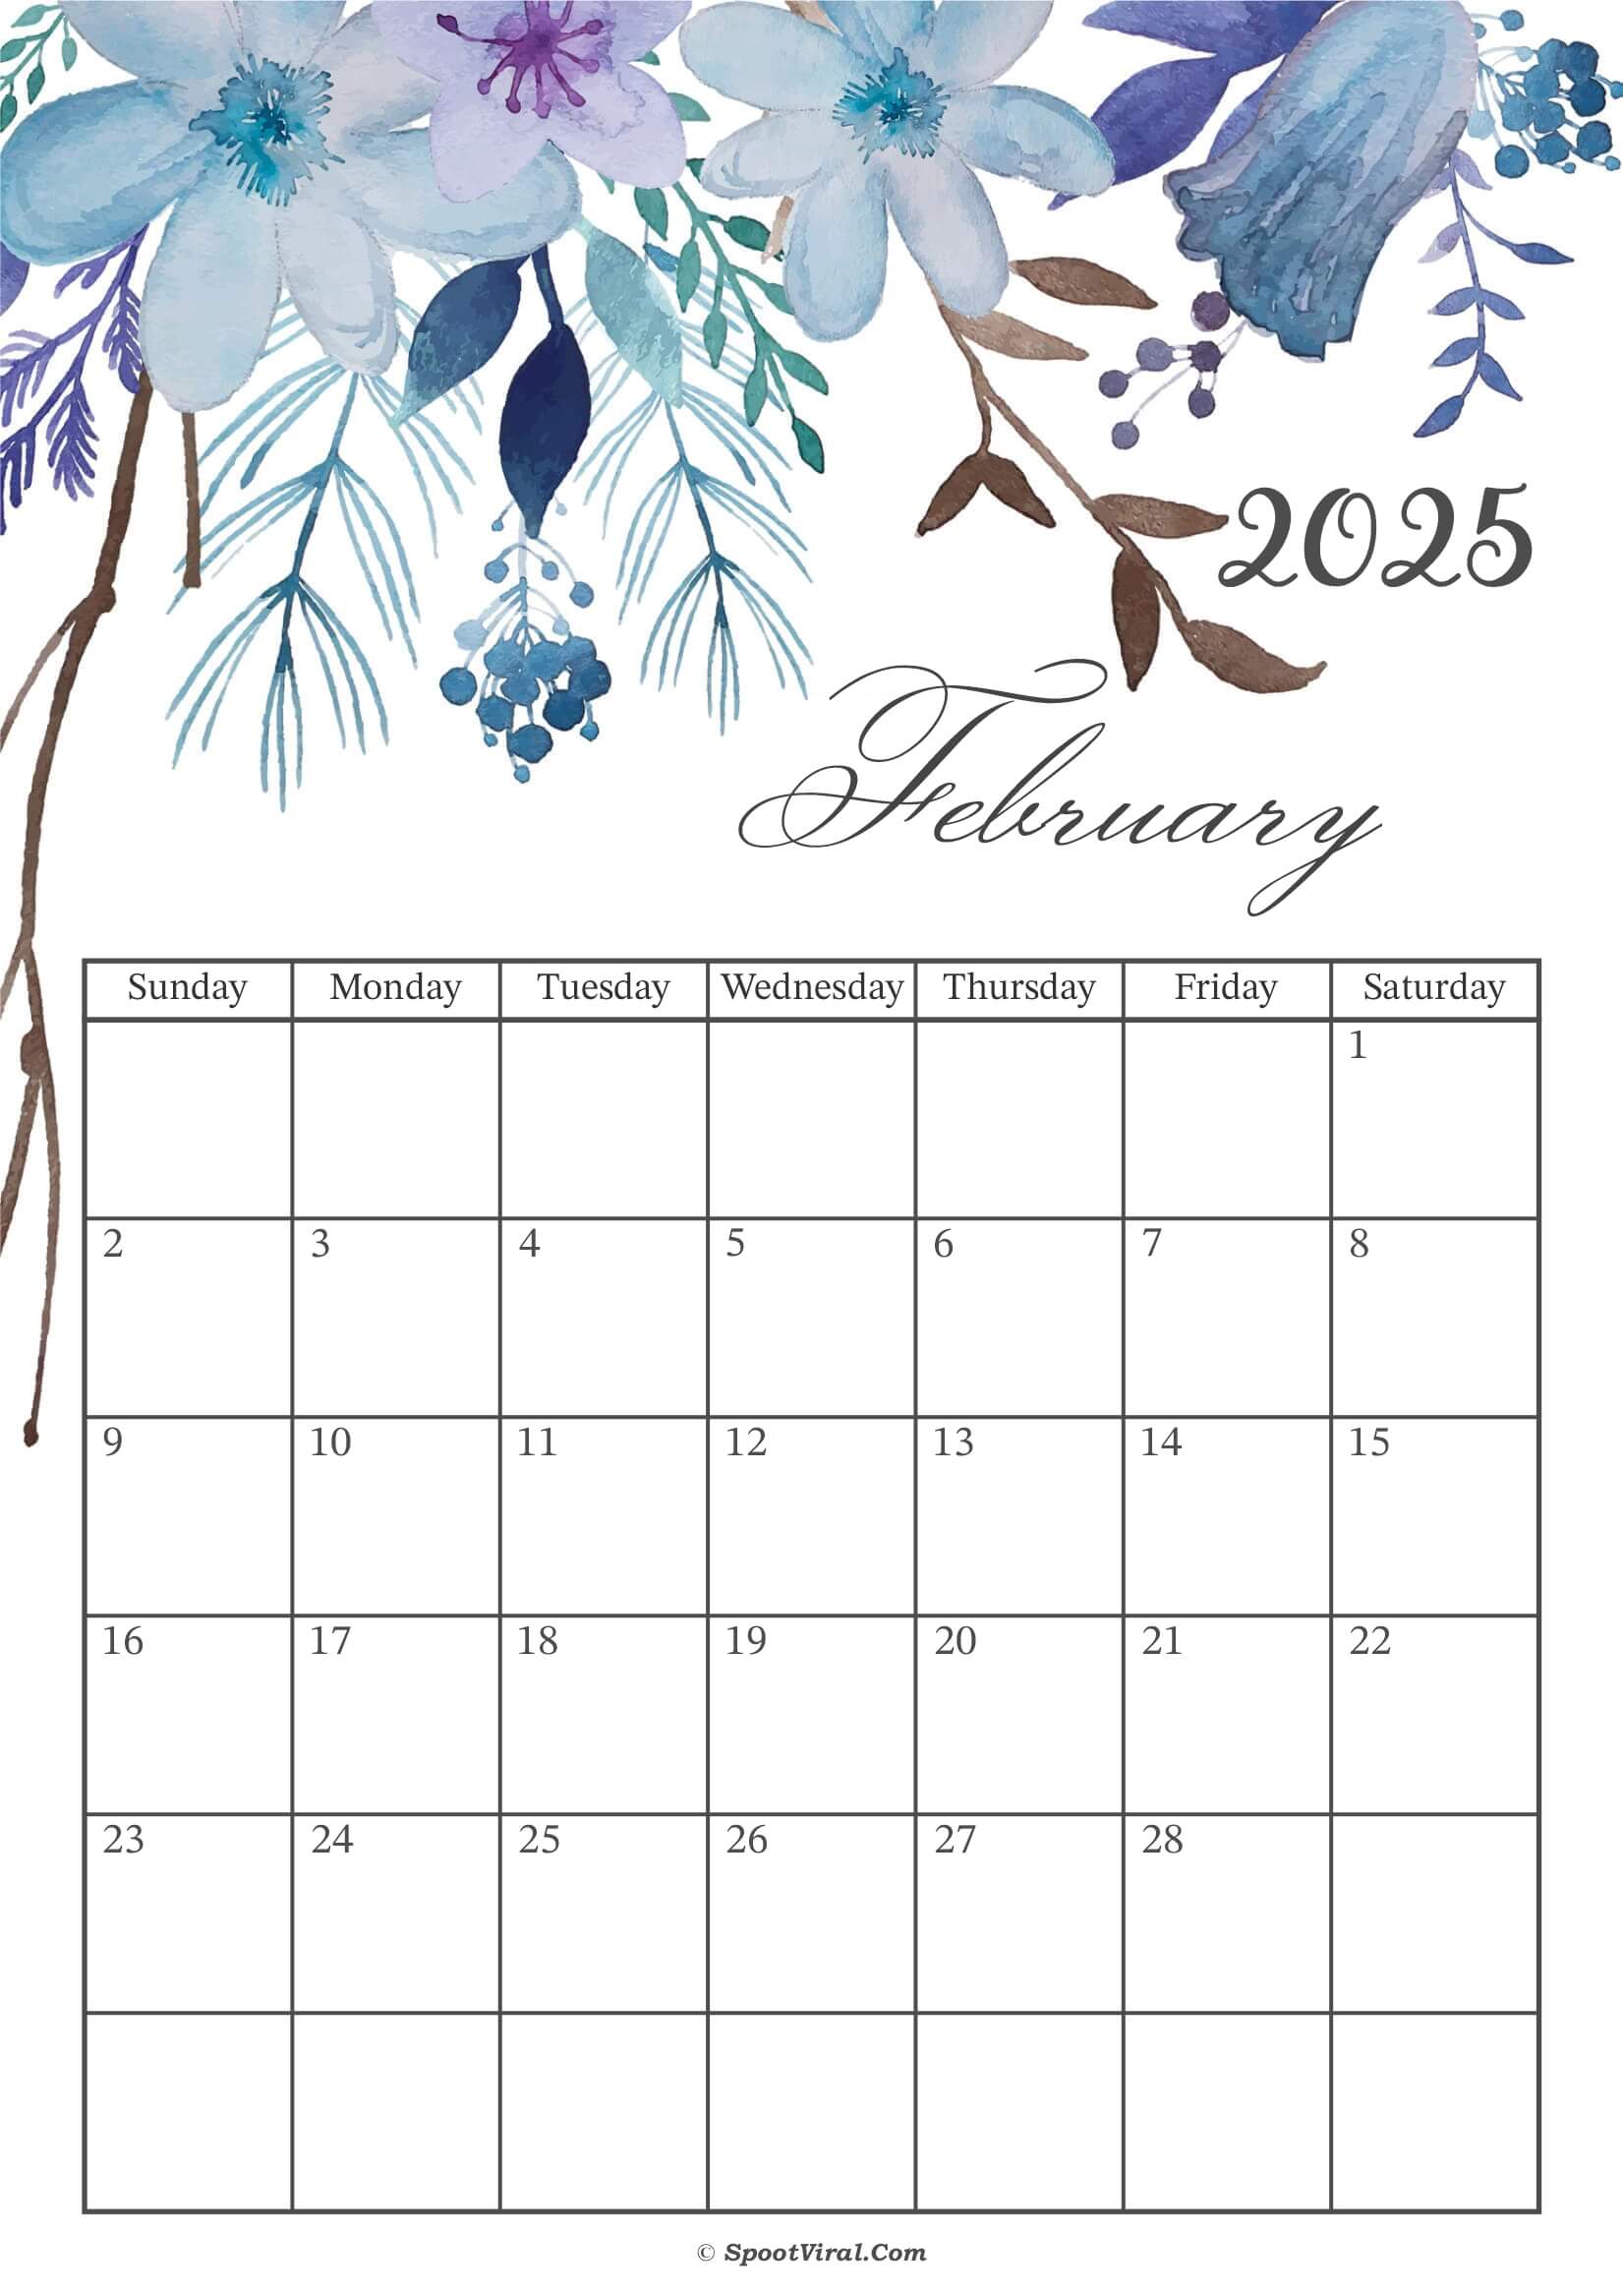 February 2025 Calendar Floral